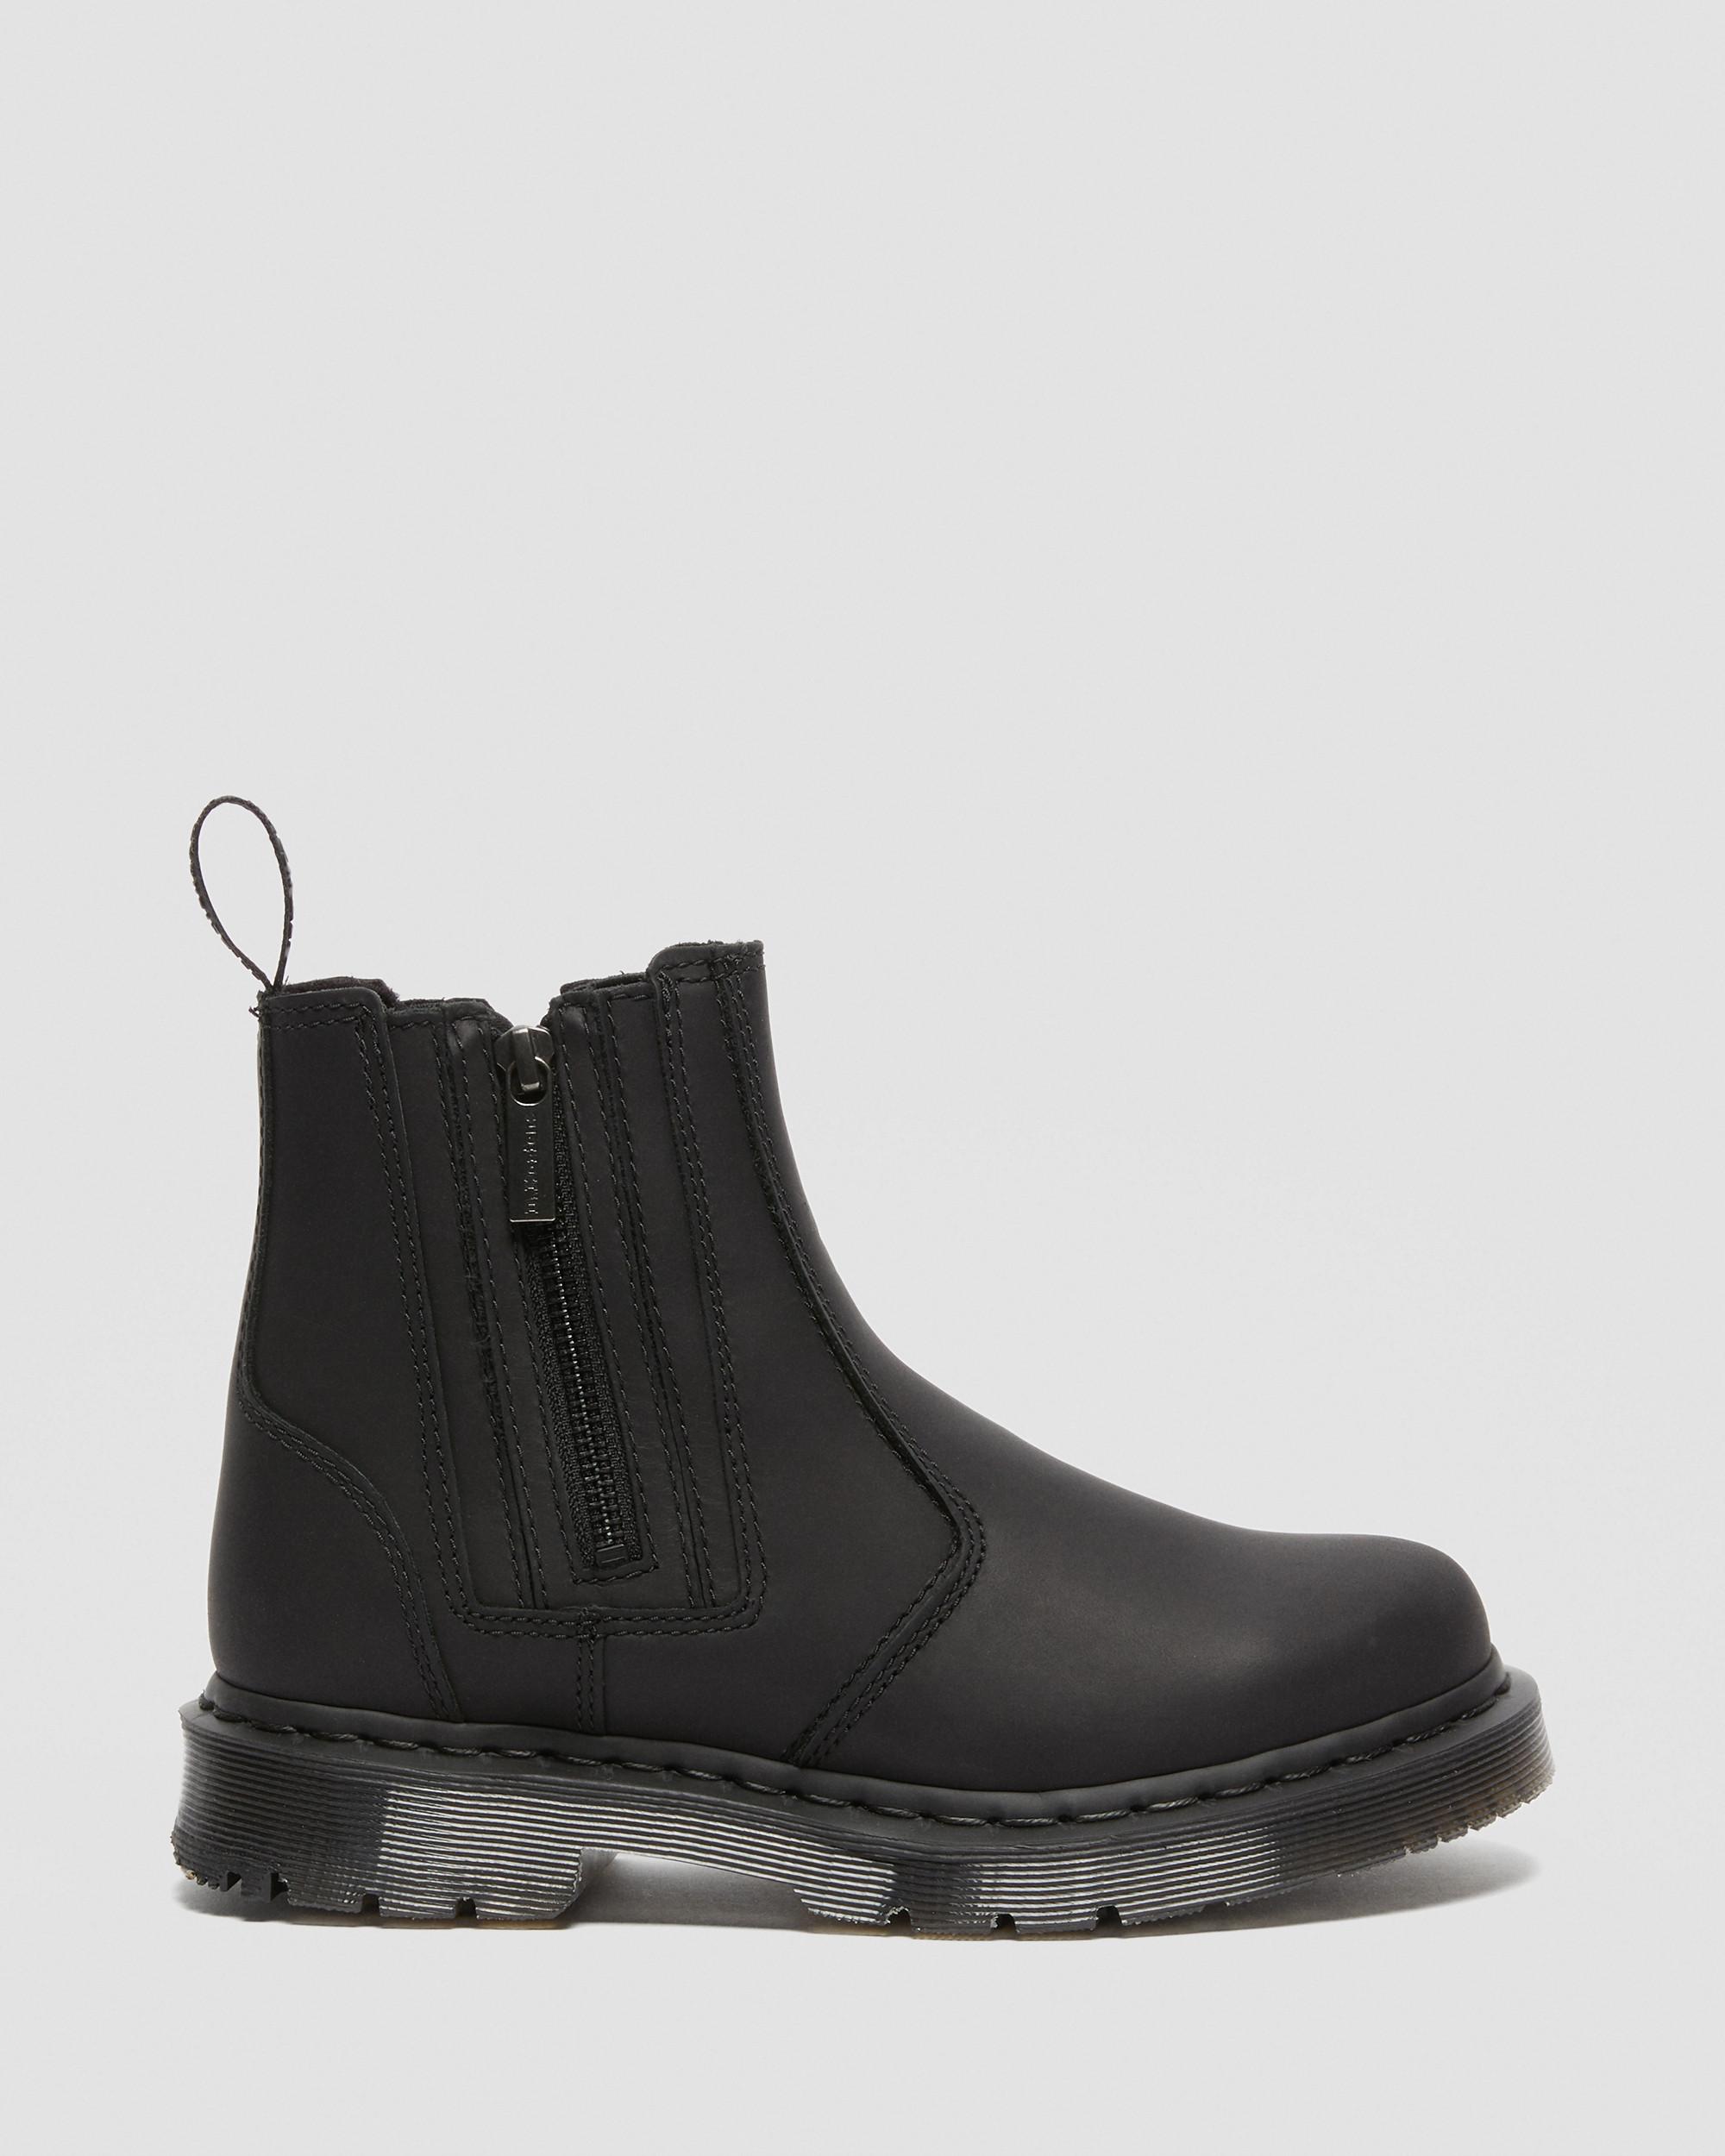 2976 Alyson DM's Wintergrip Chelsea Boots in Black